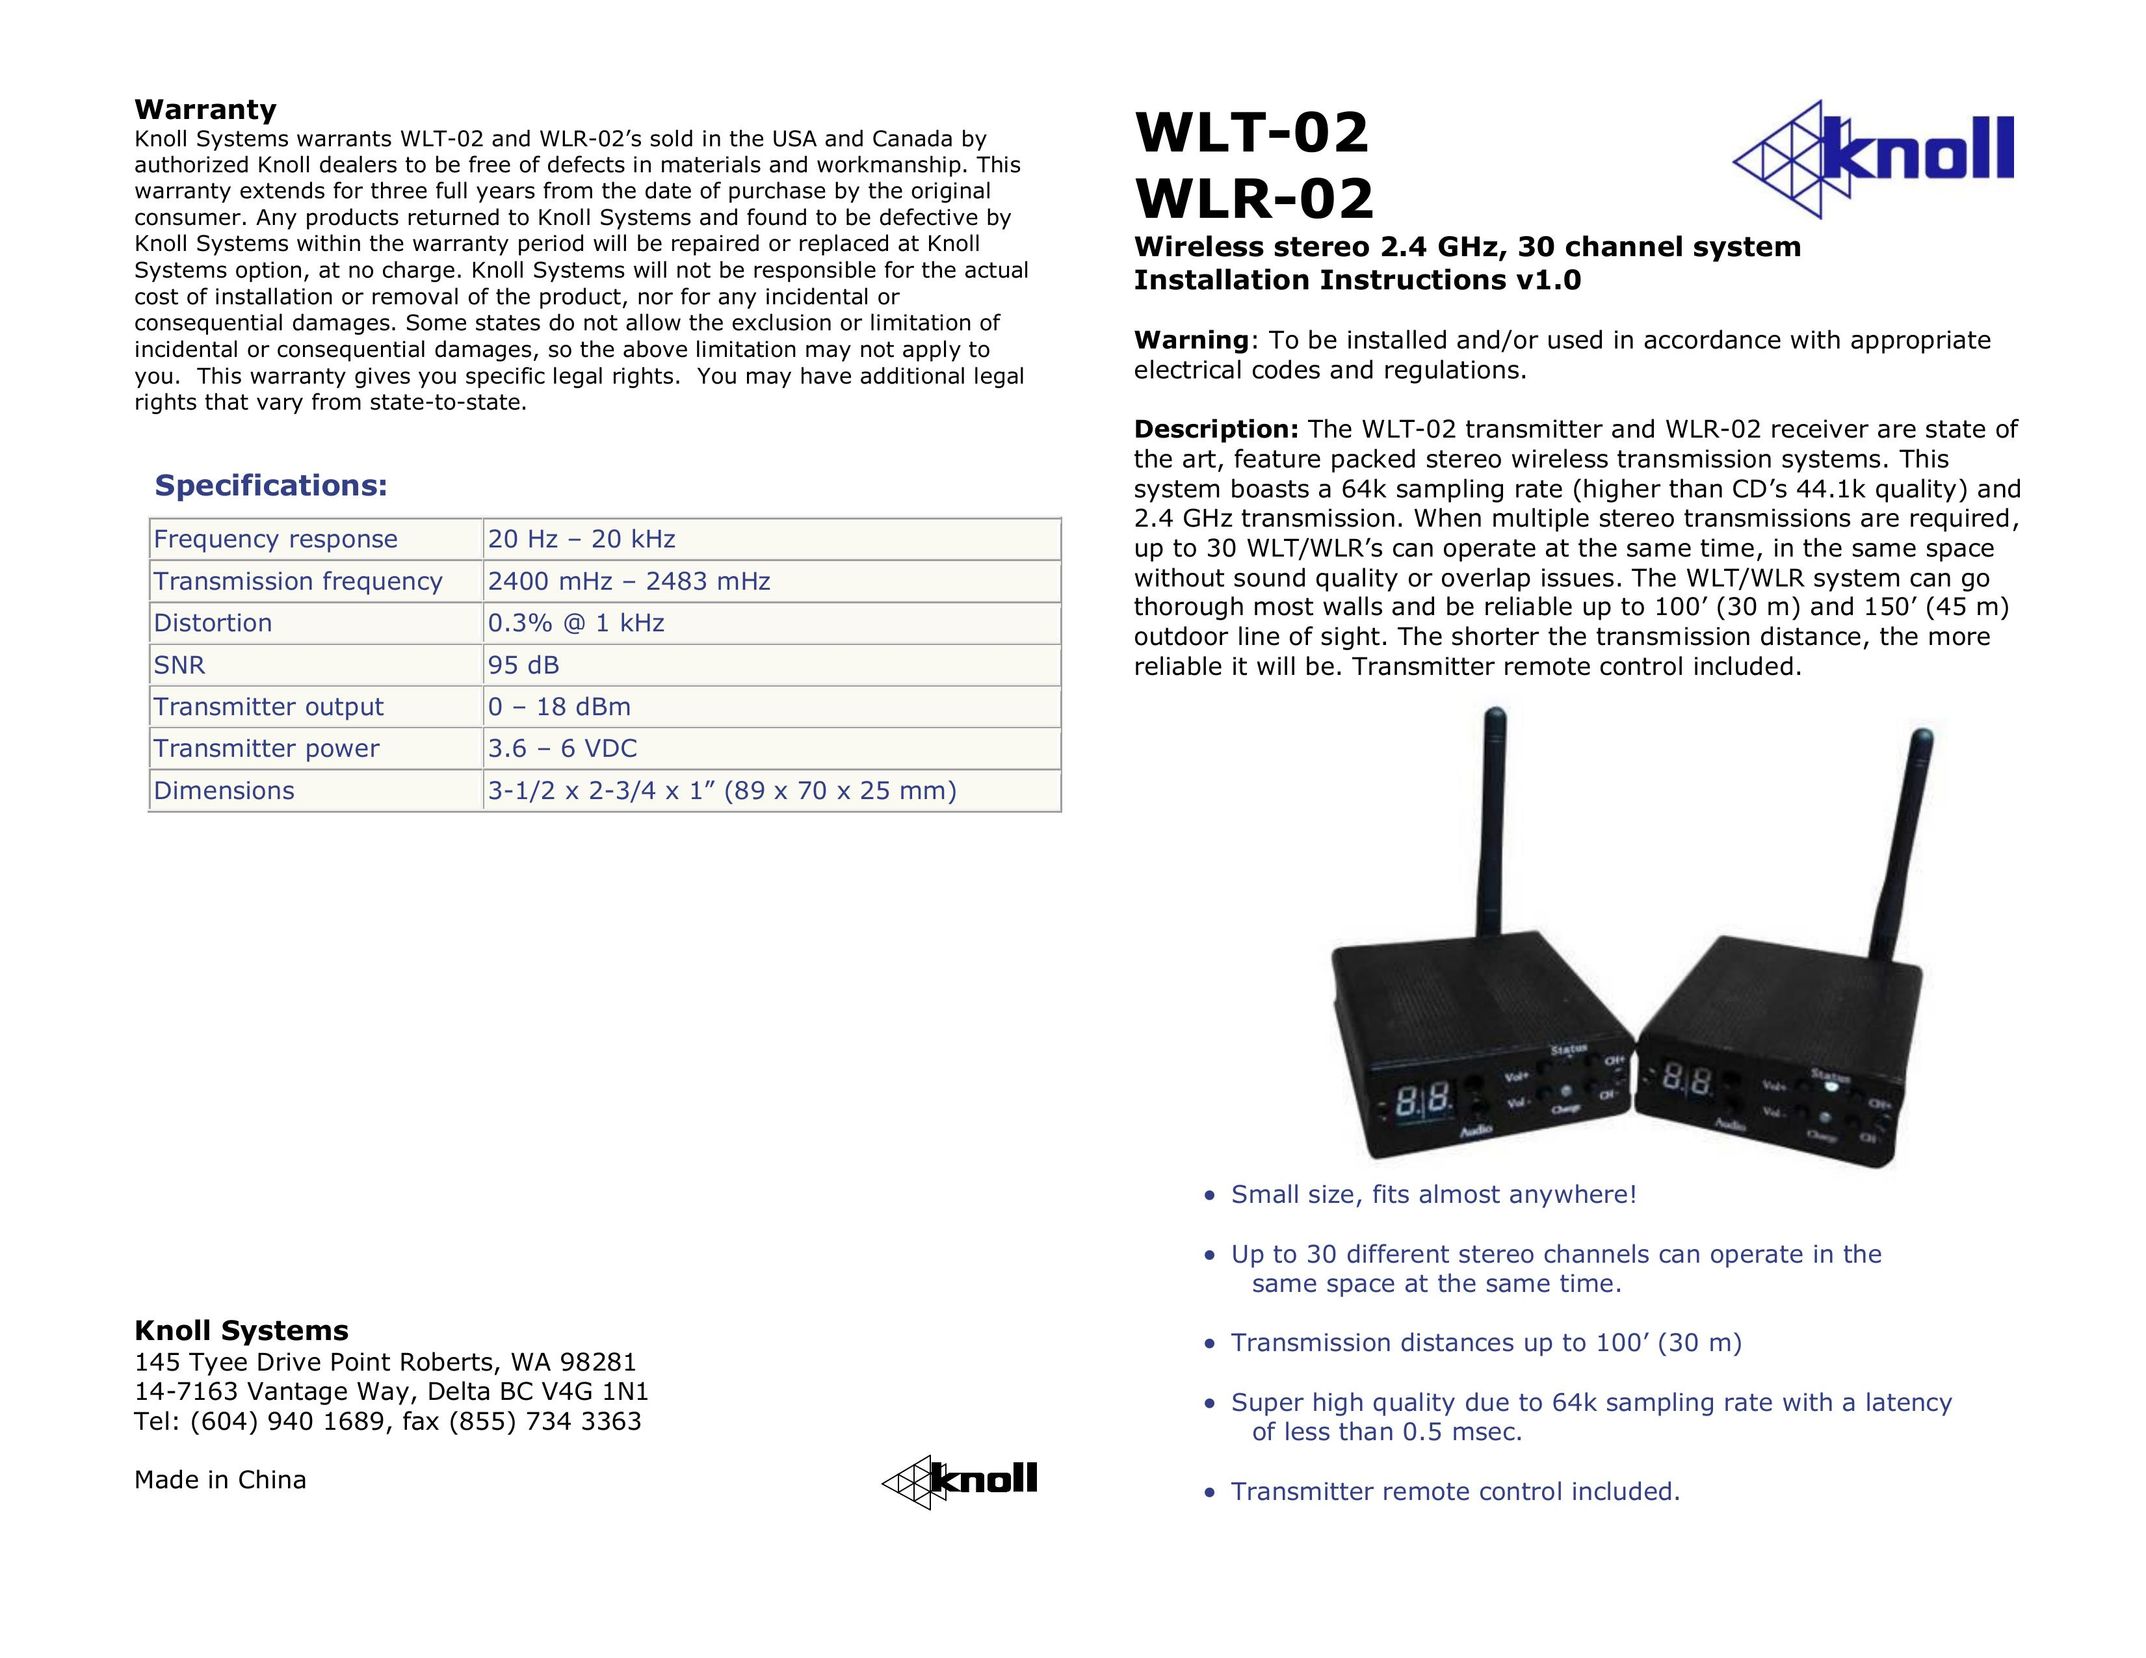 Knoll Systems WLR-02 Speaker System User Manual